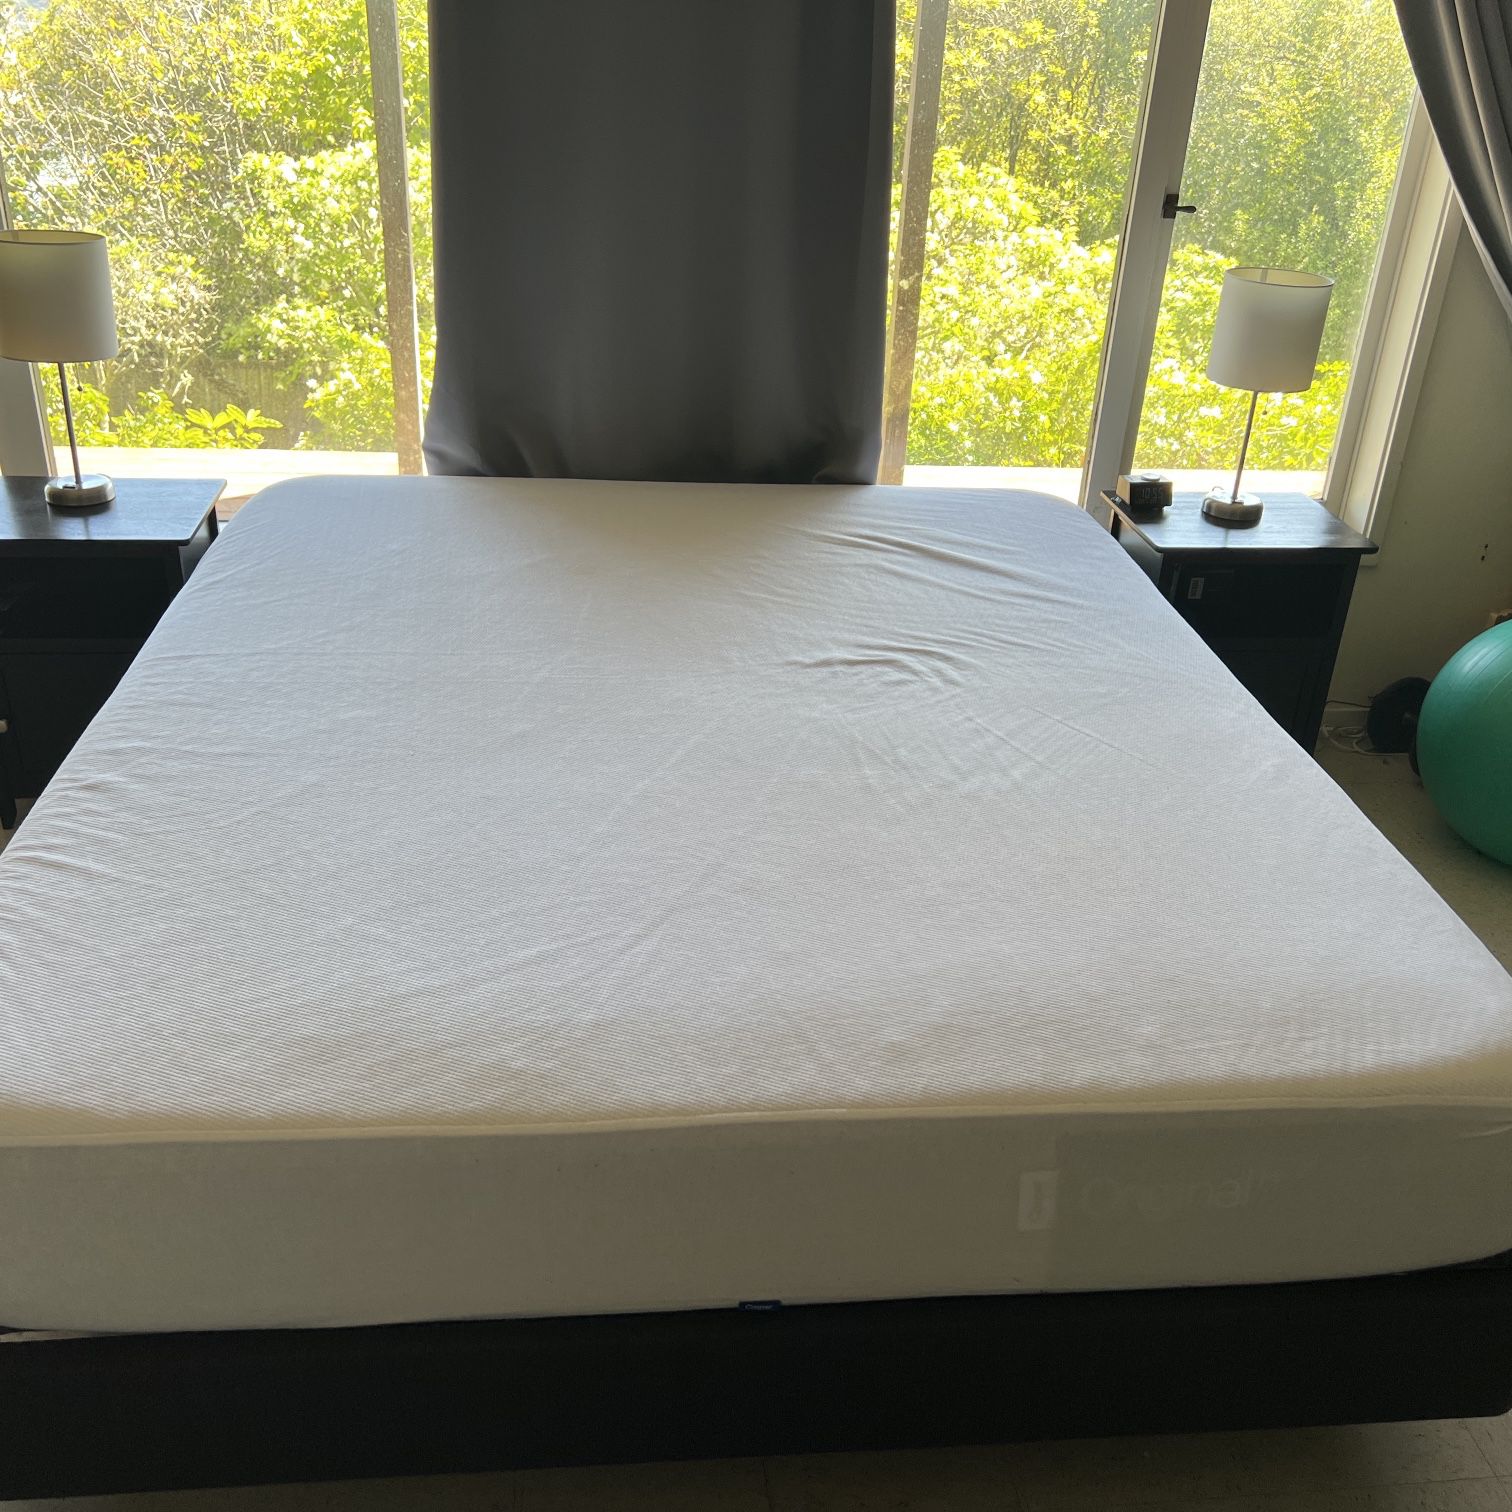 Bedroom set featuring like-new Casper Original Hybrid mattress